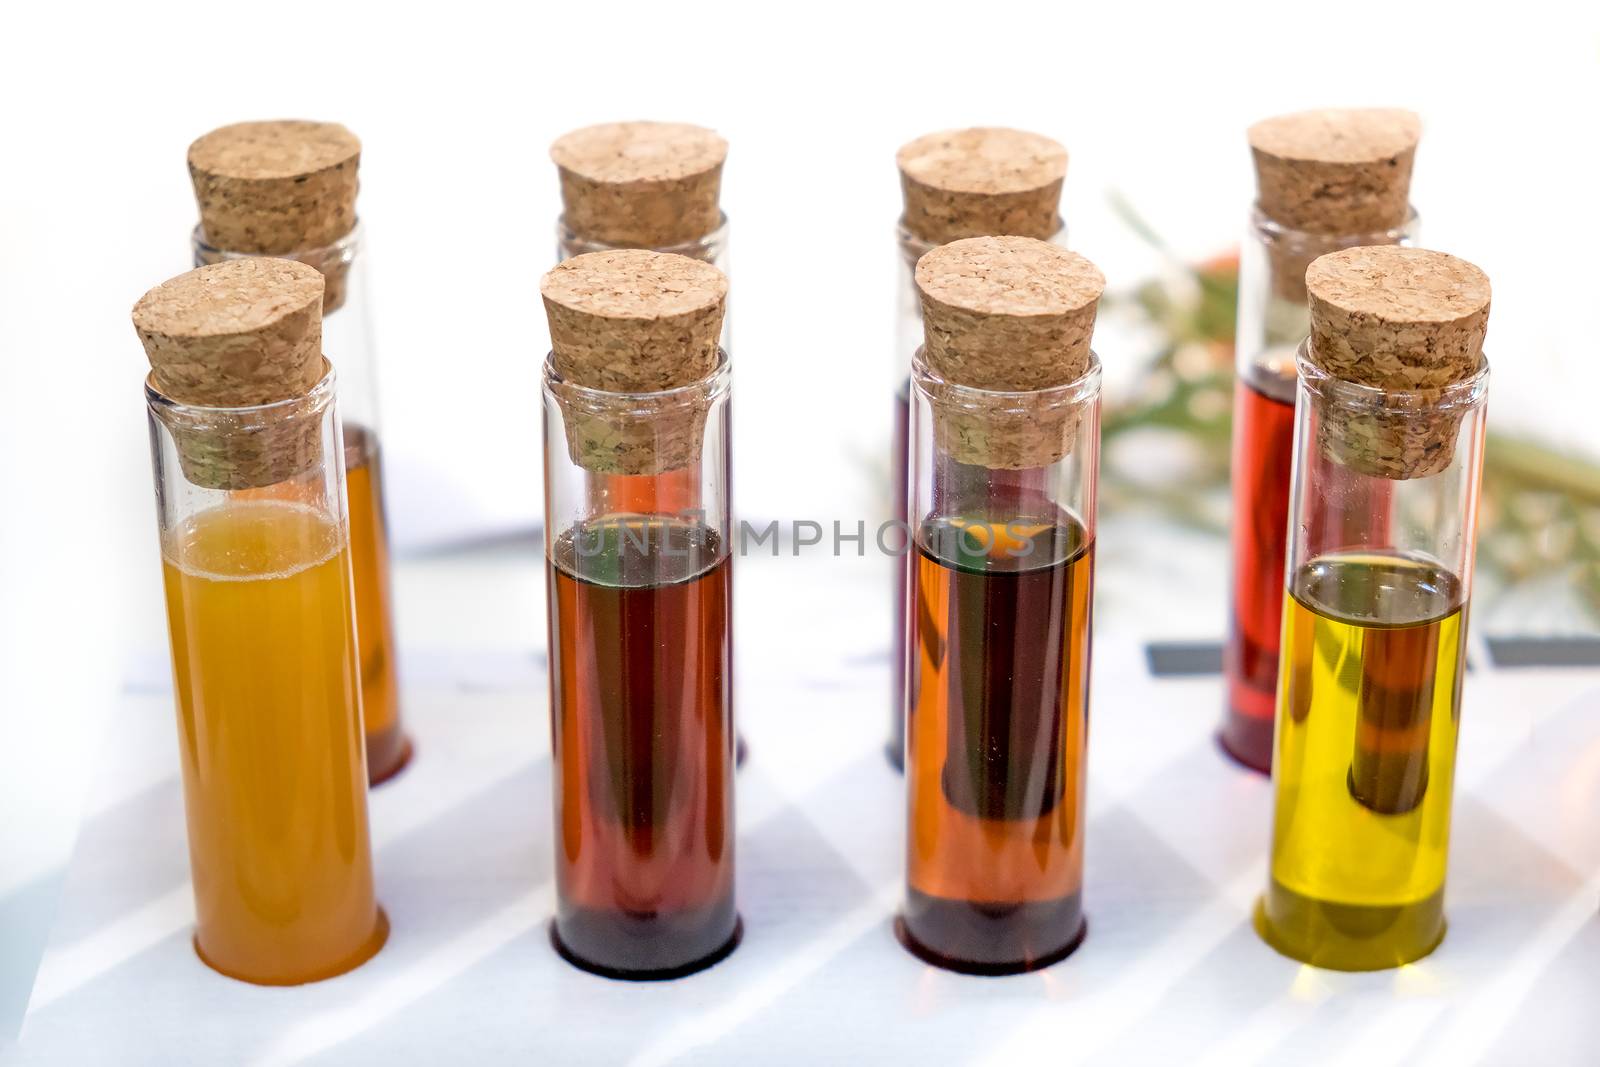 oil specimen liquid test tube urine samples vials by LucaLorenzelli